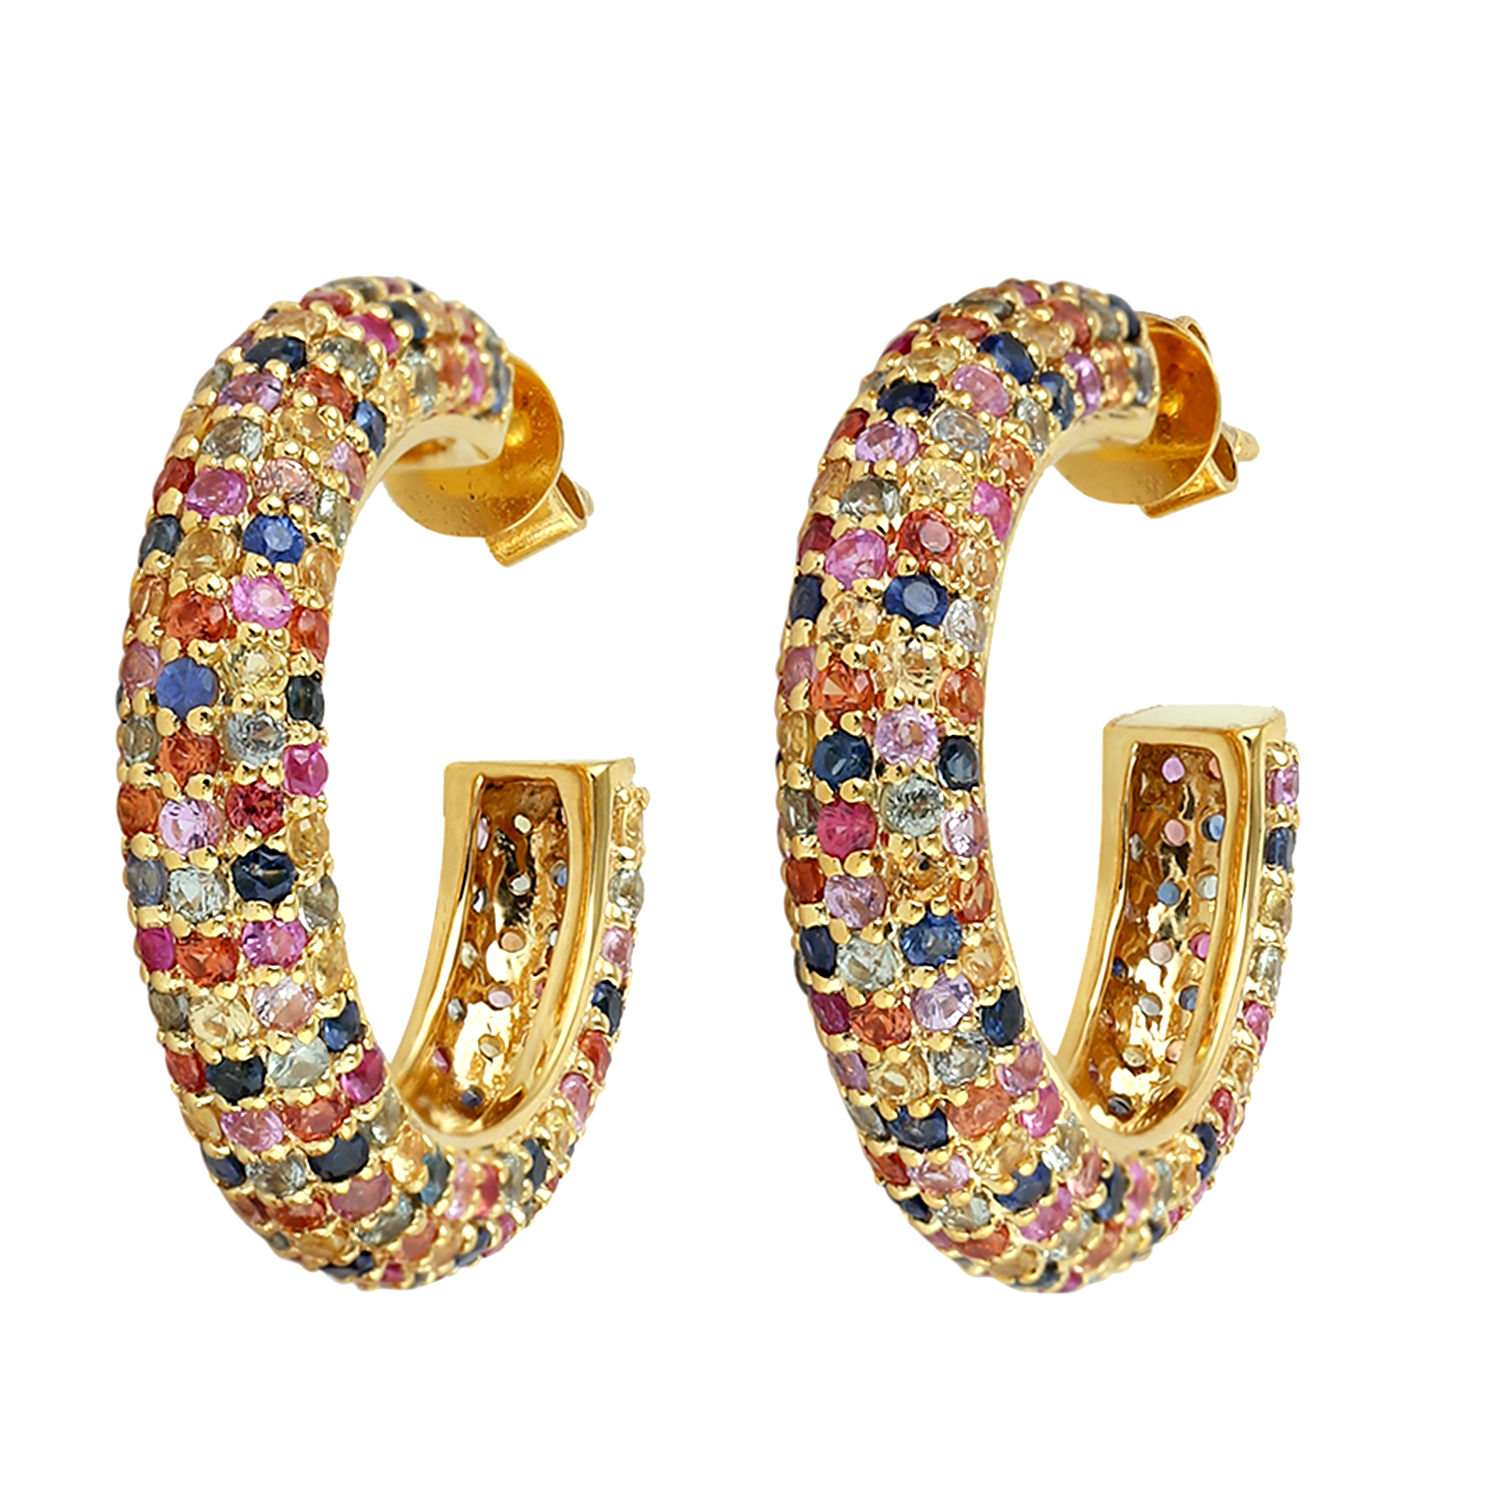 6.91 Natural Sapphire Hoop Earrings 18k Yellow Gold Jewelry | eBay